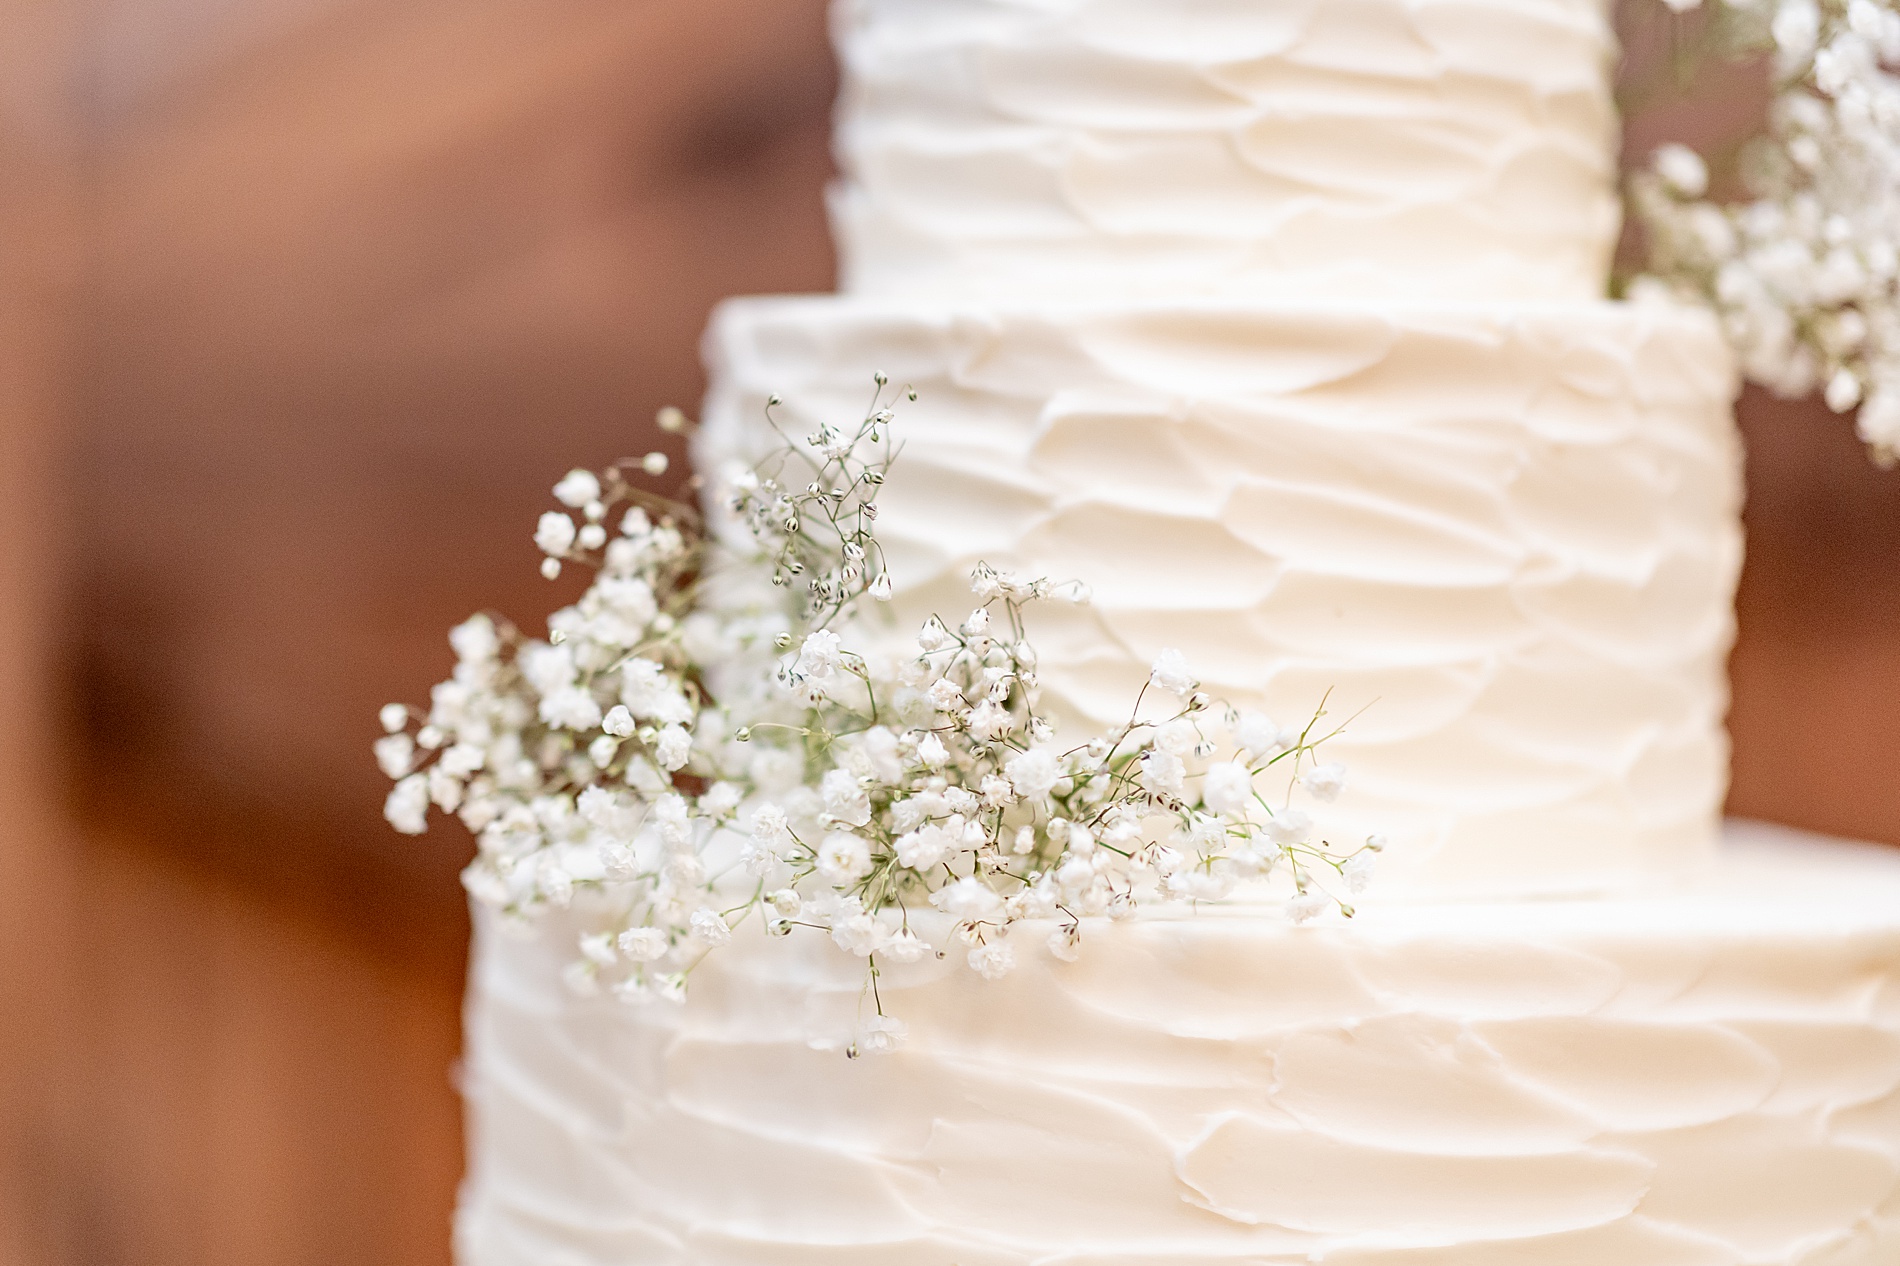 wedding cake details 